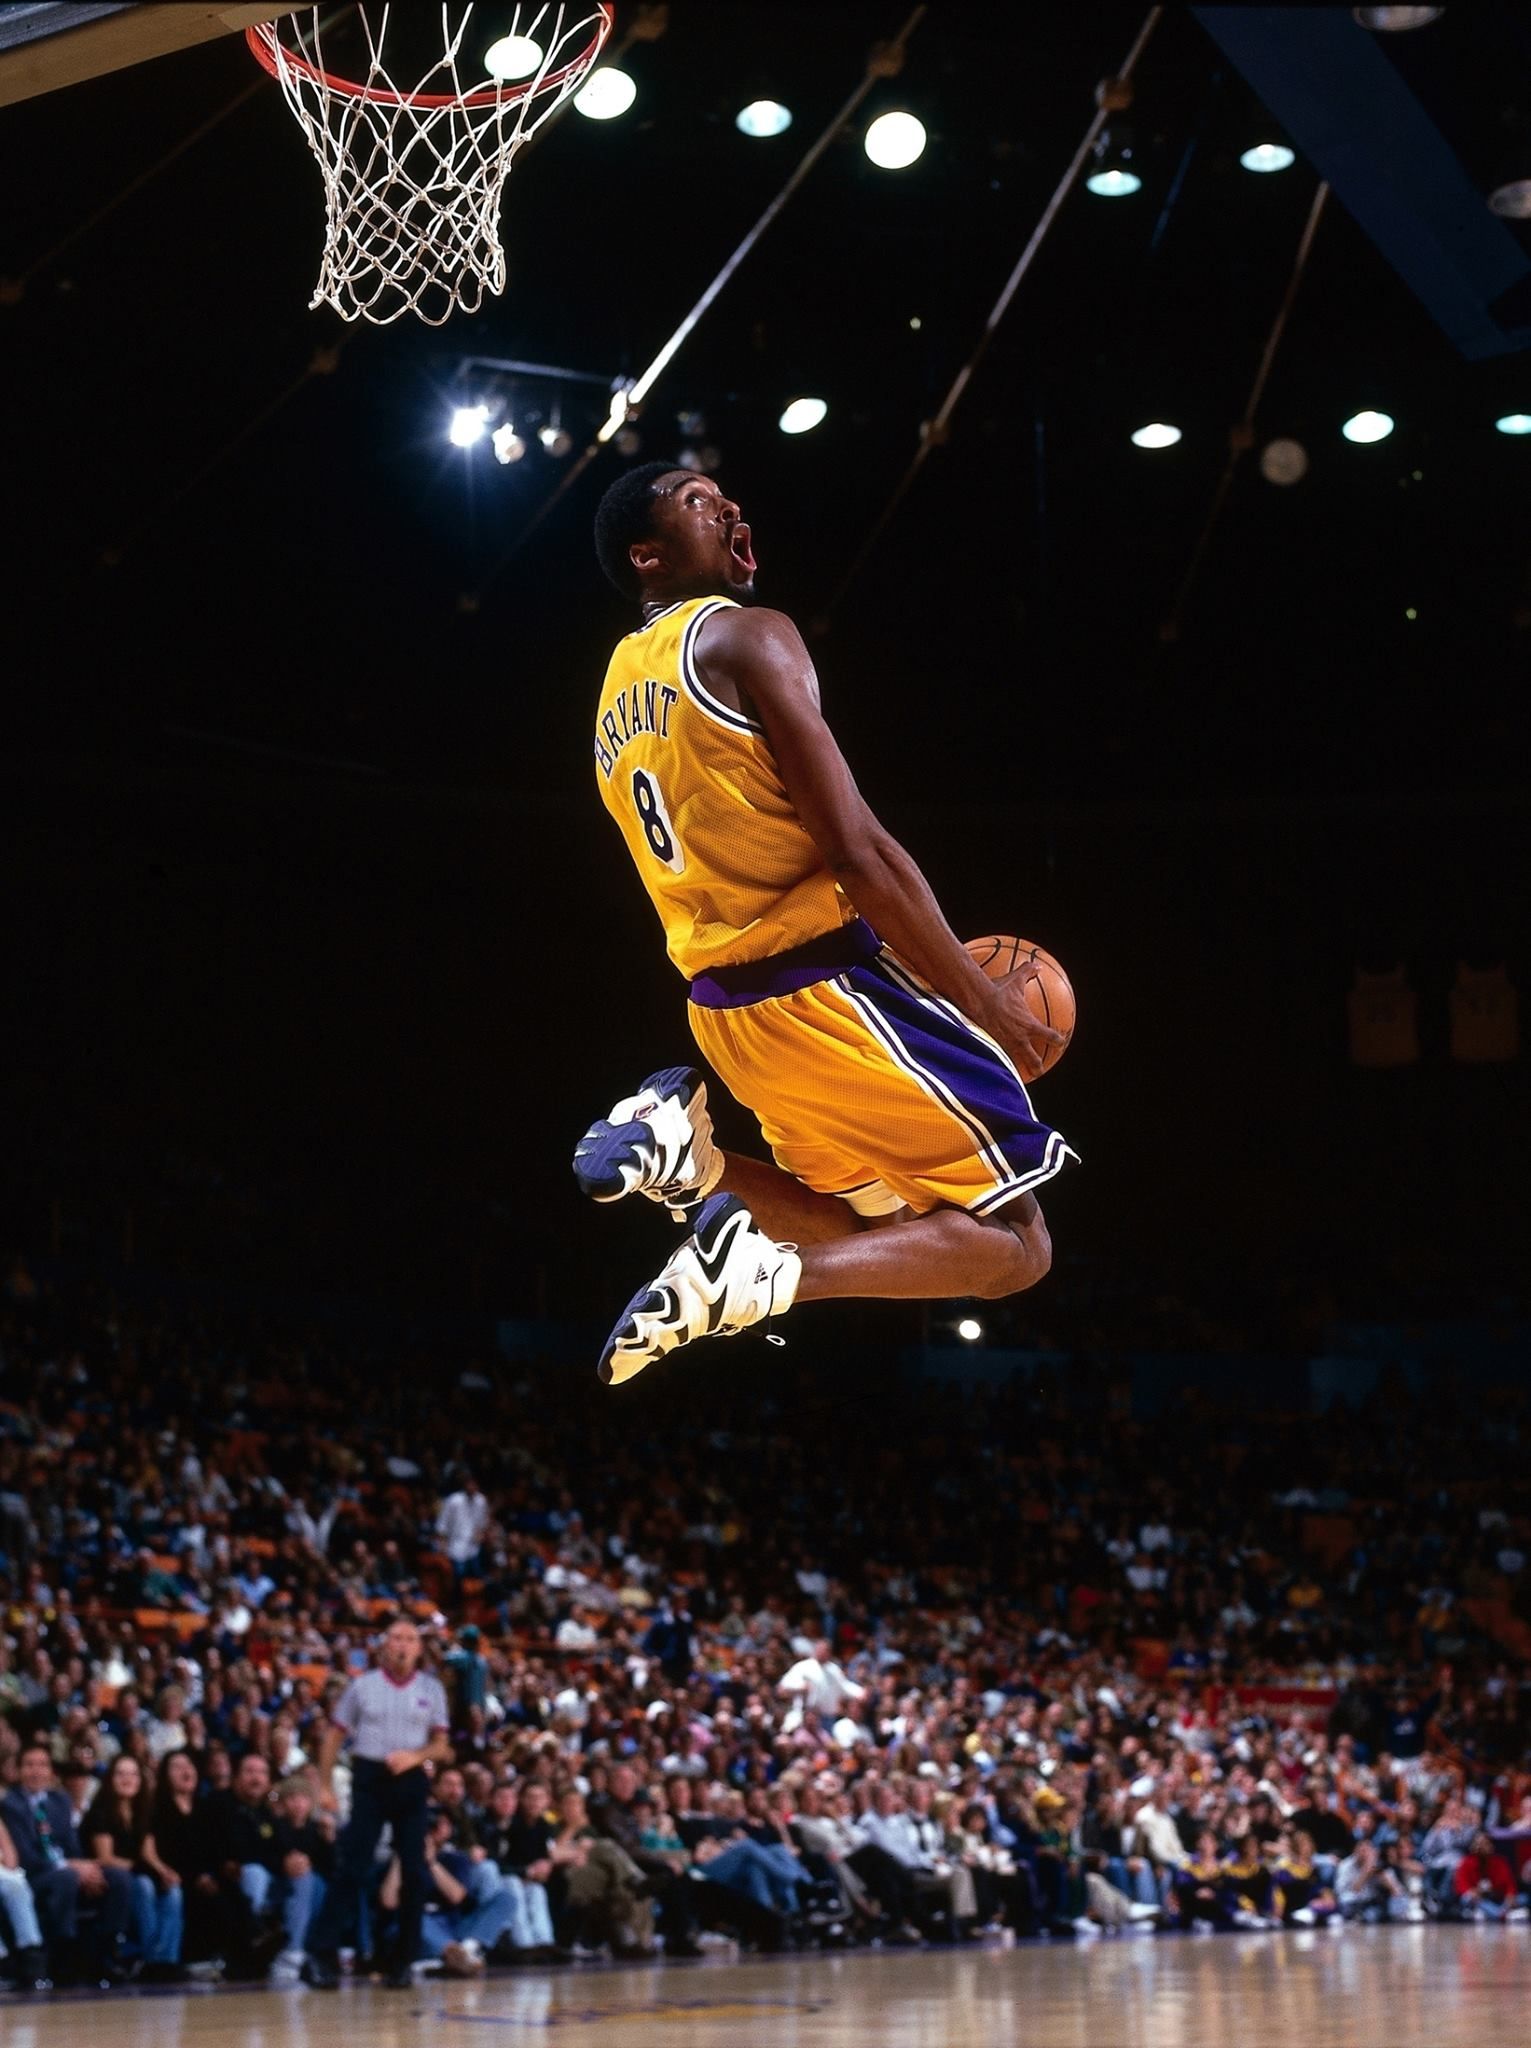 Drew Harder On Basketball Kobe Bryant Dunk